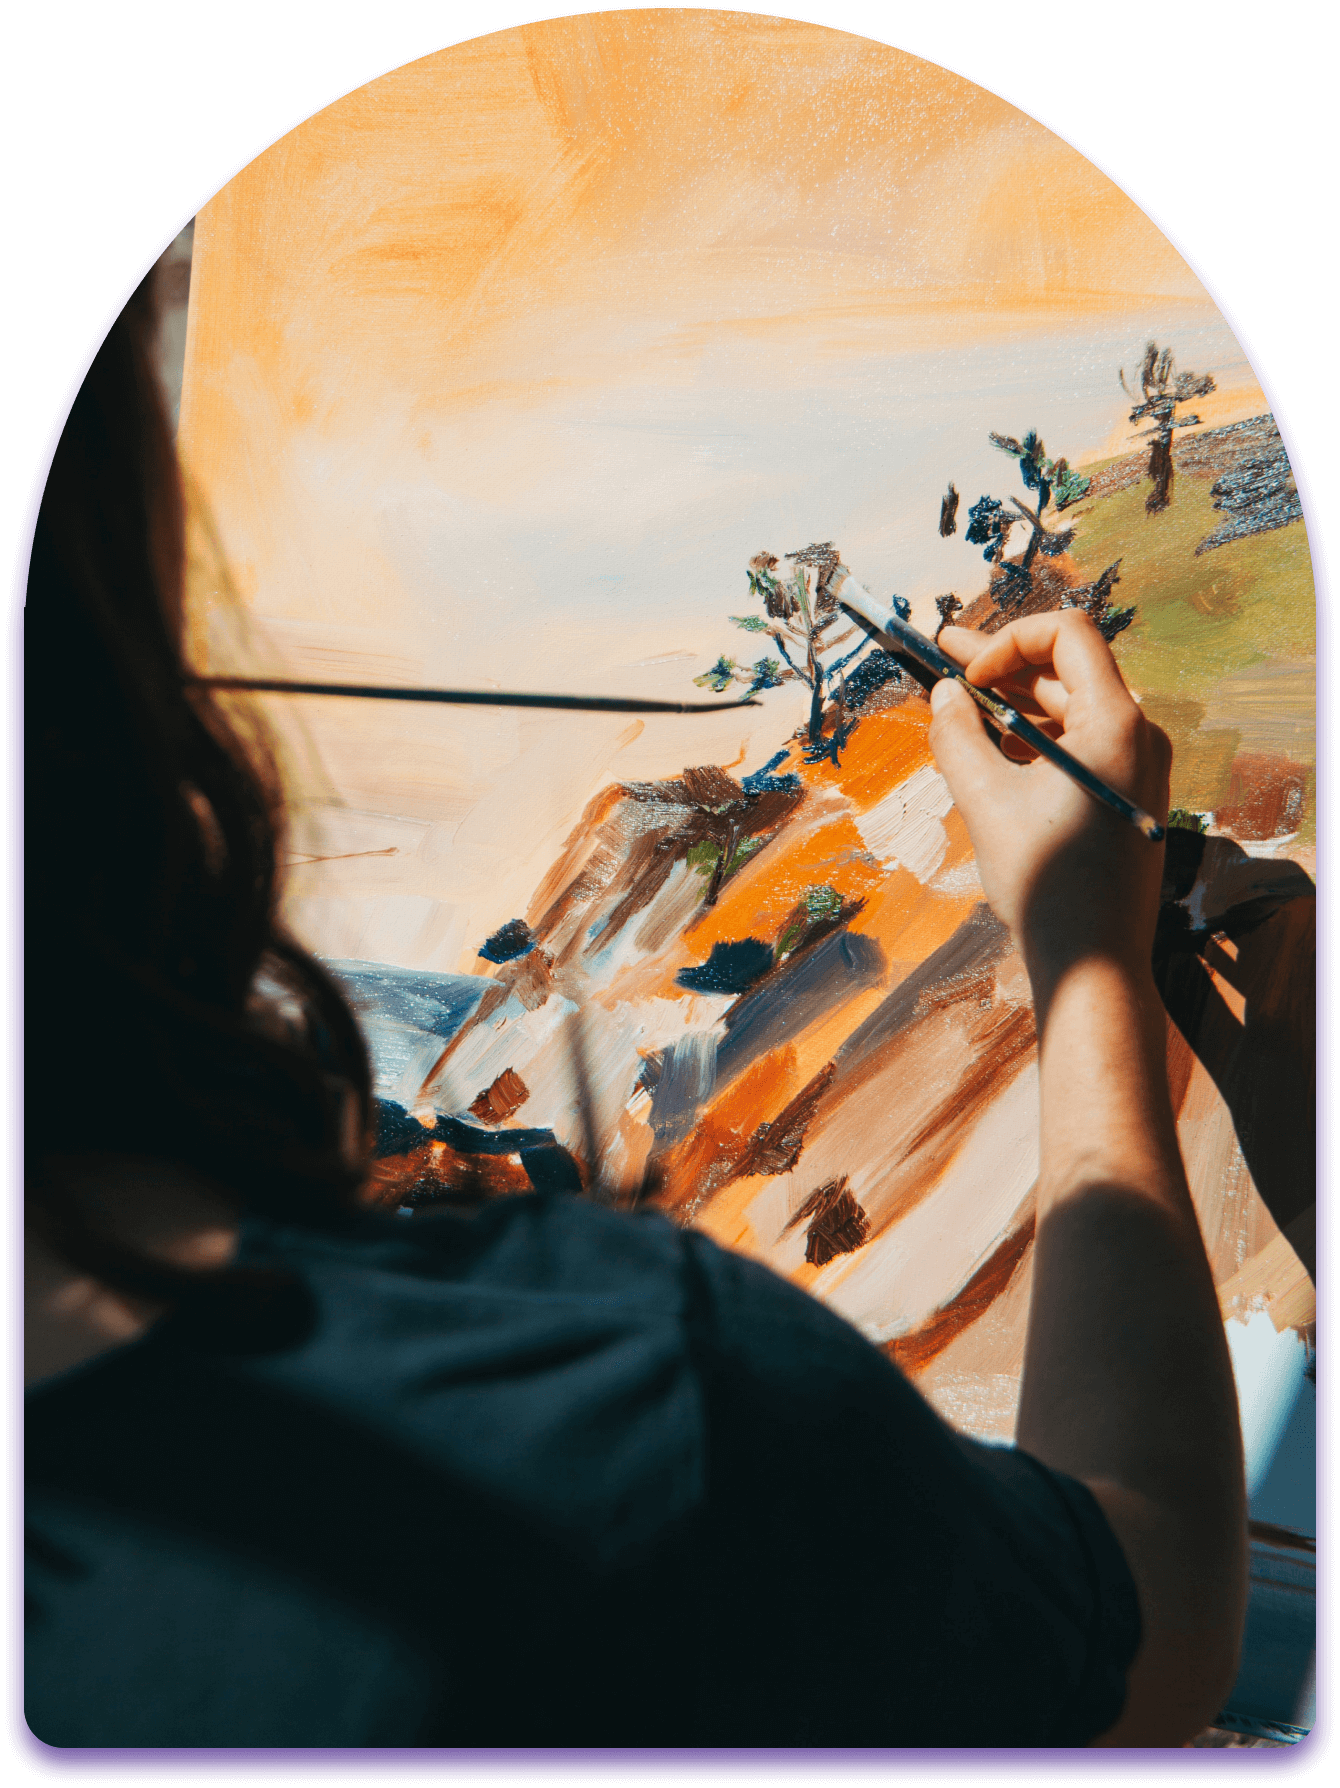 member painting a landscape